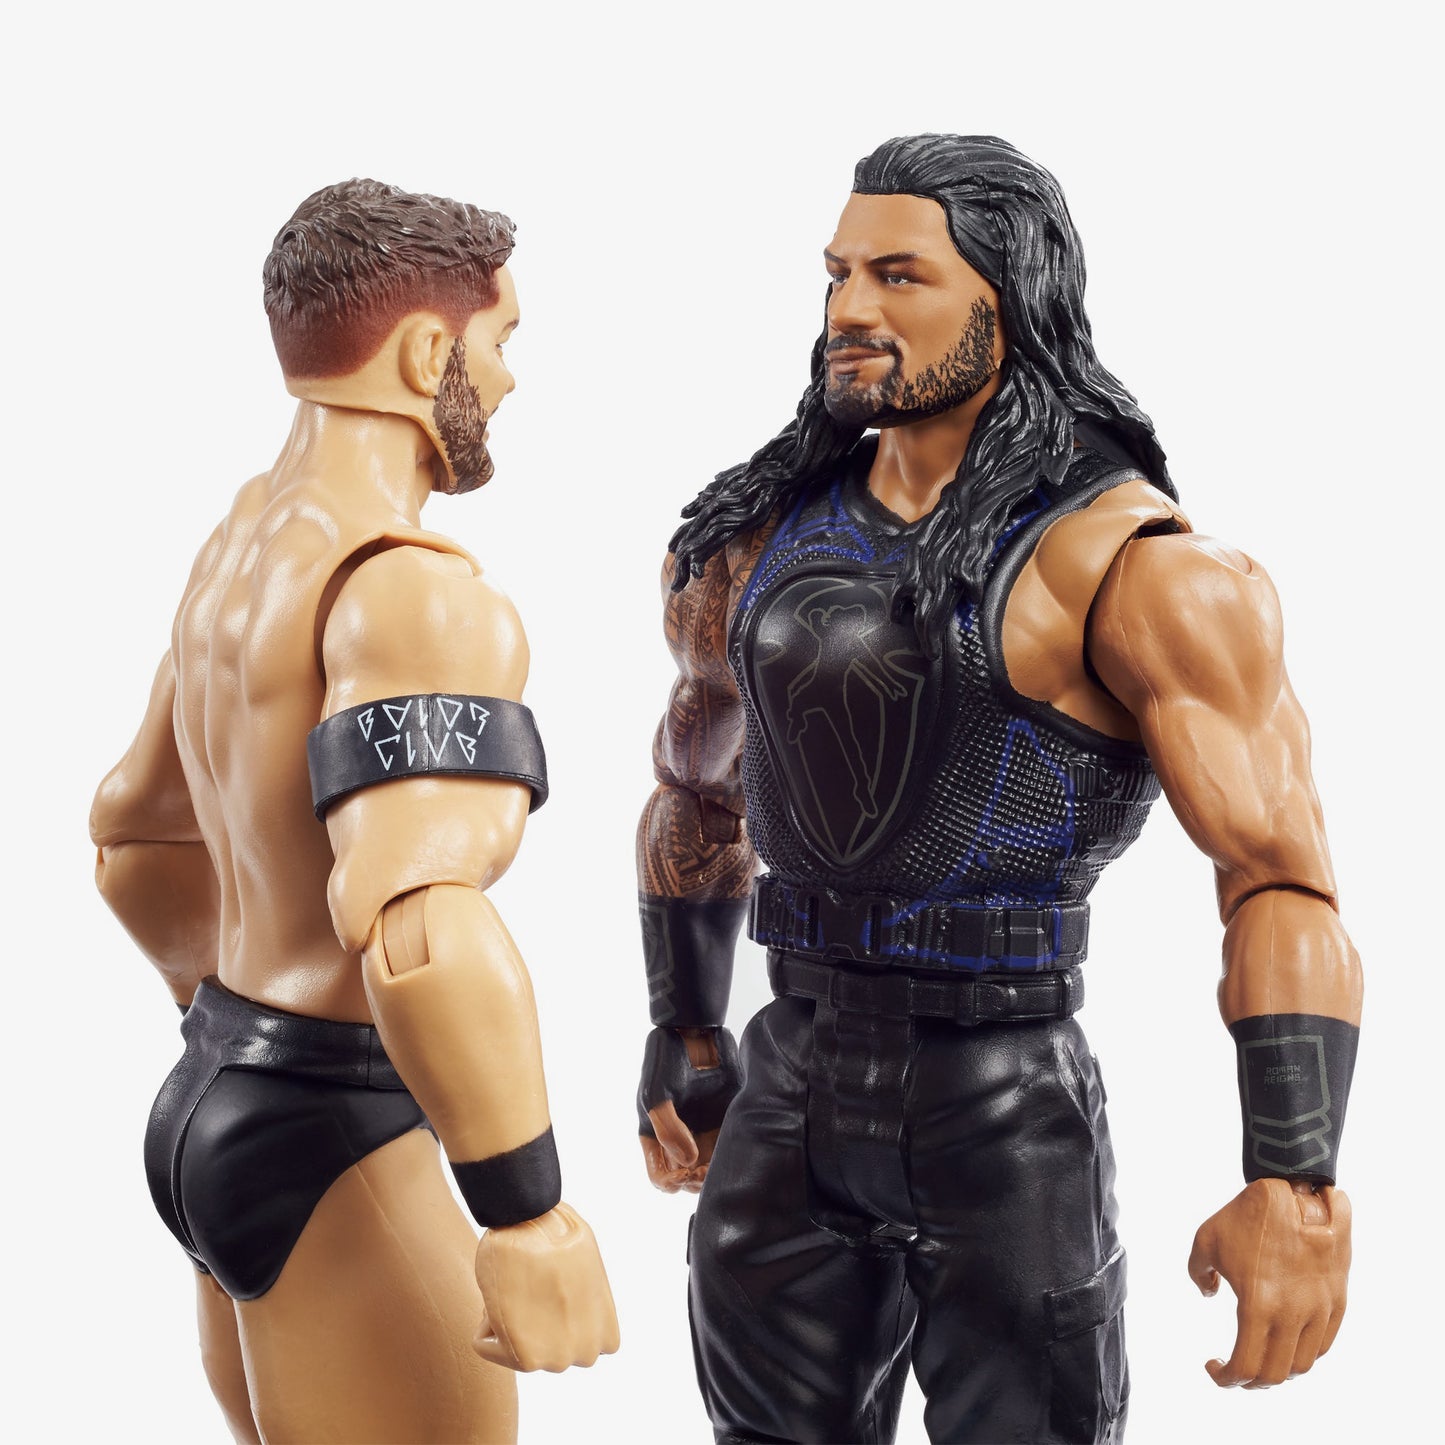 Roman Reigns & Finn Balor - WWE Championship Showdown 2-Pack Series #1